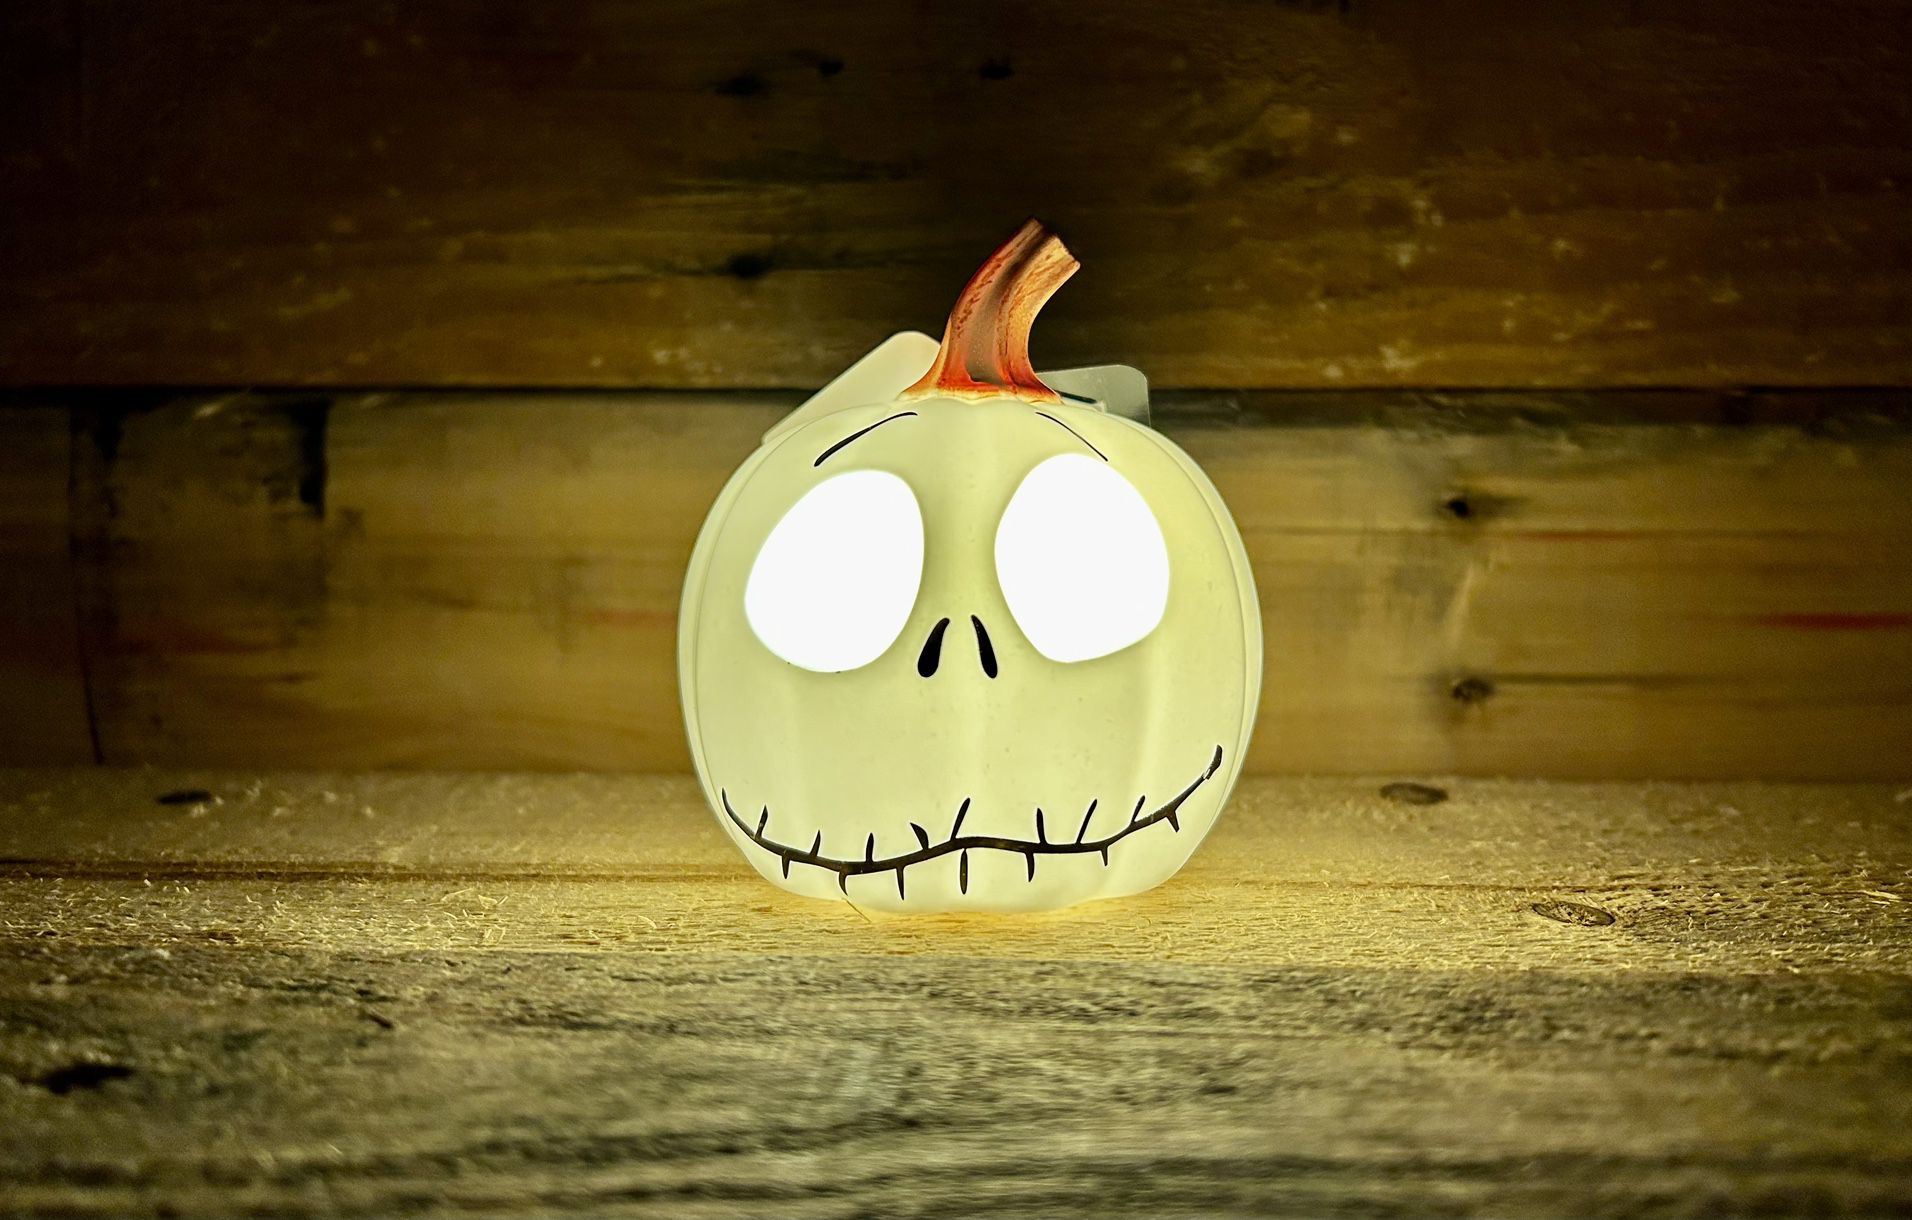 The Nightmare Before Christmas Jack Skellington Jack-O-Lantern Light Up Pumpkin